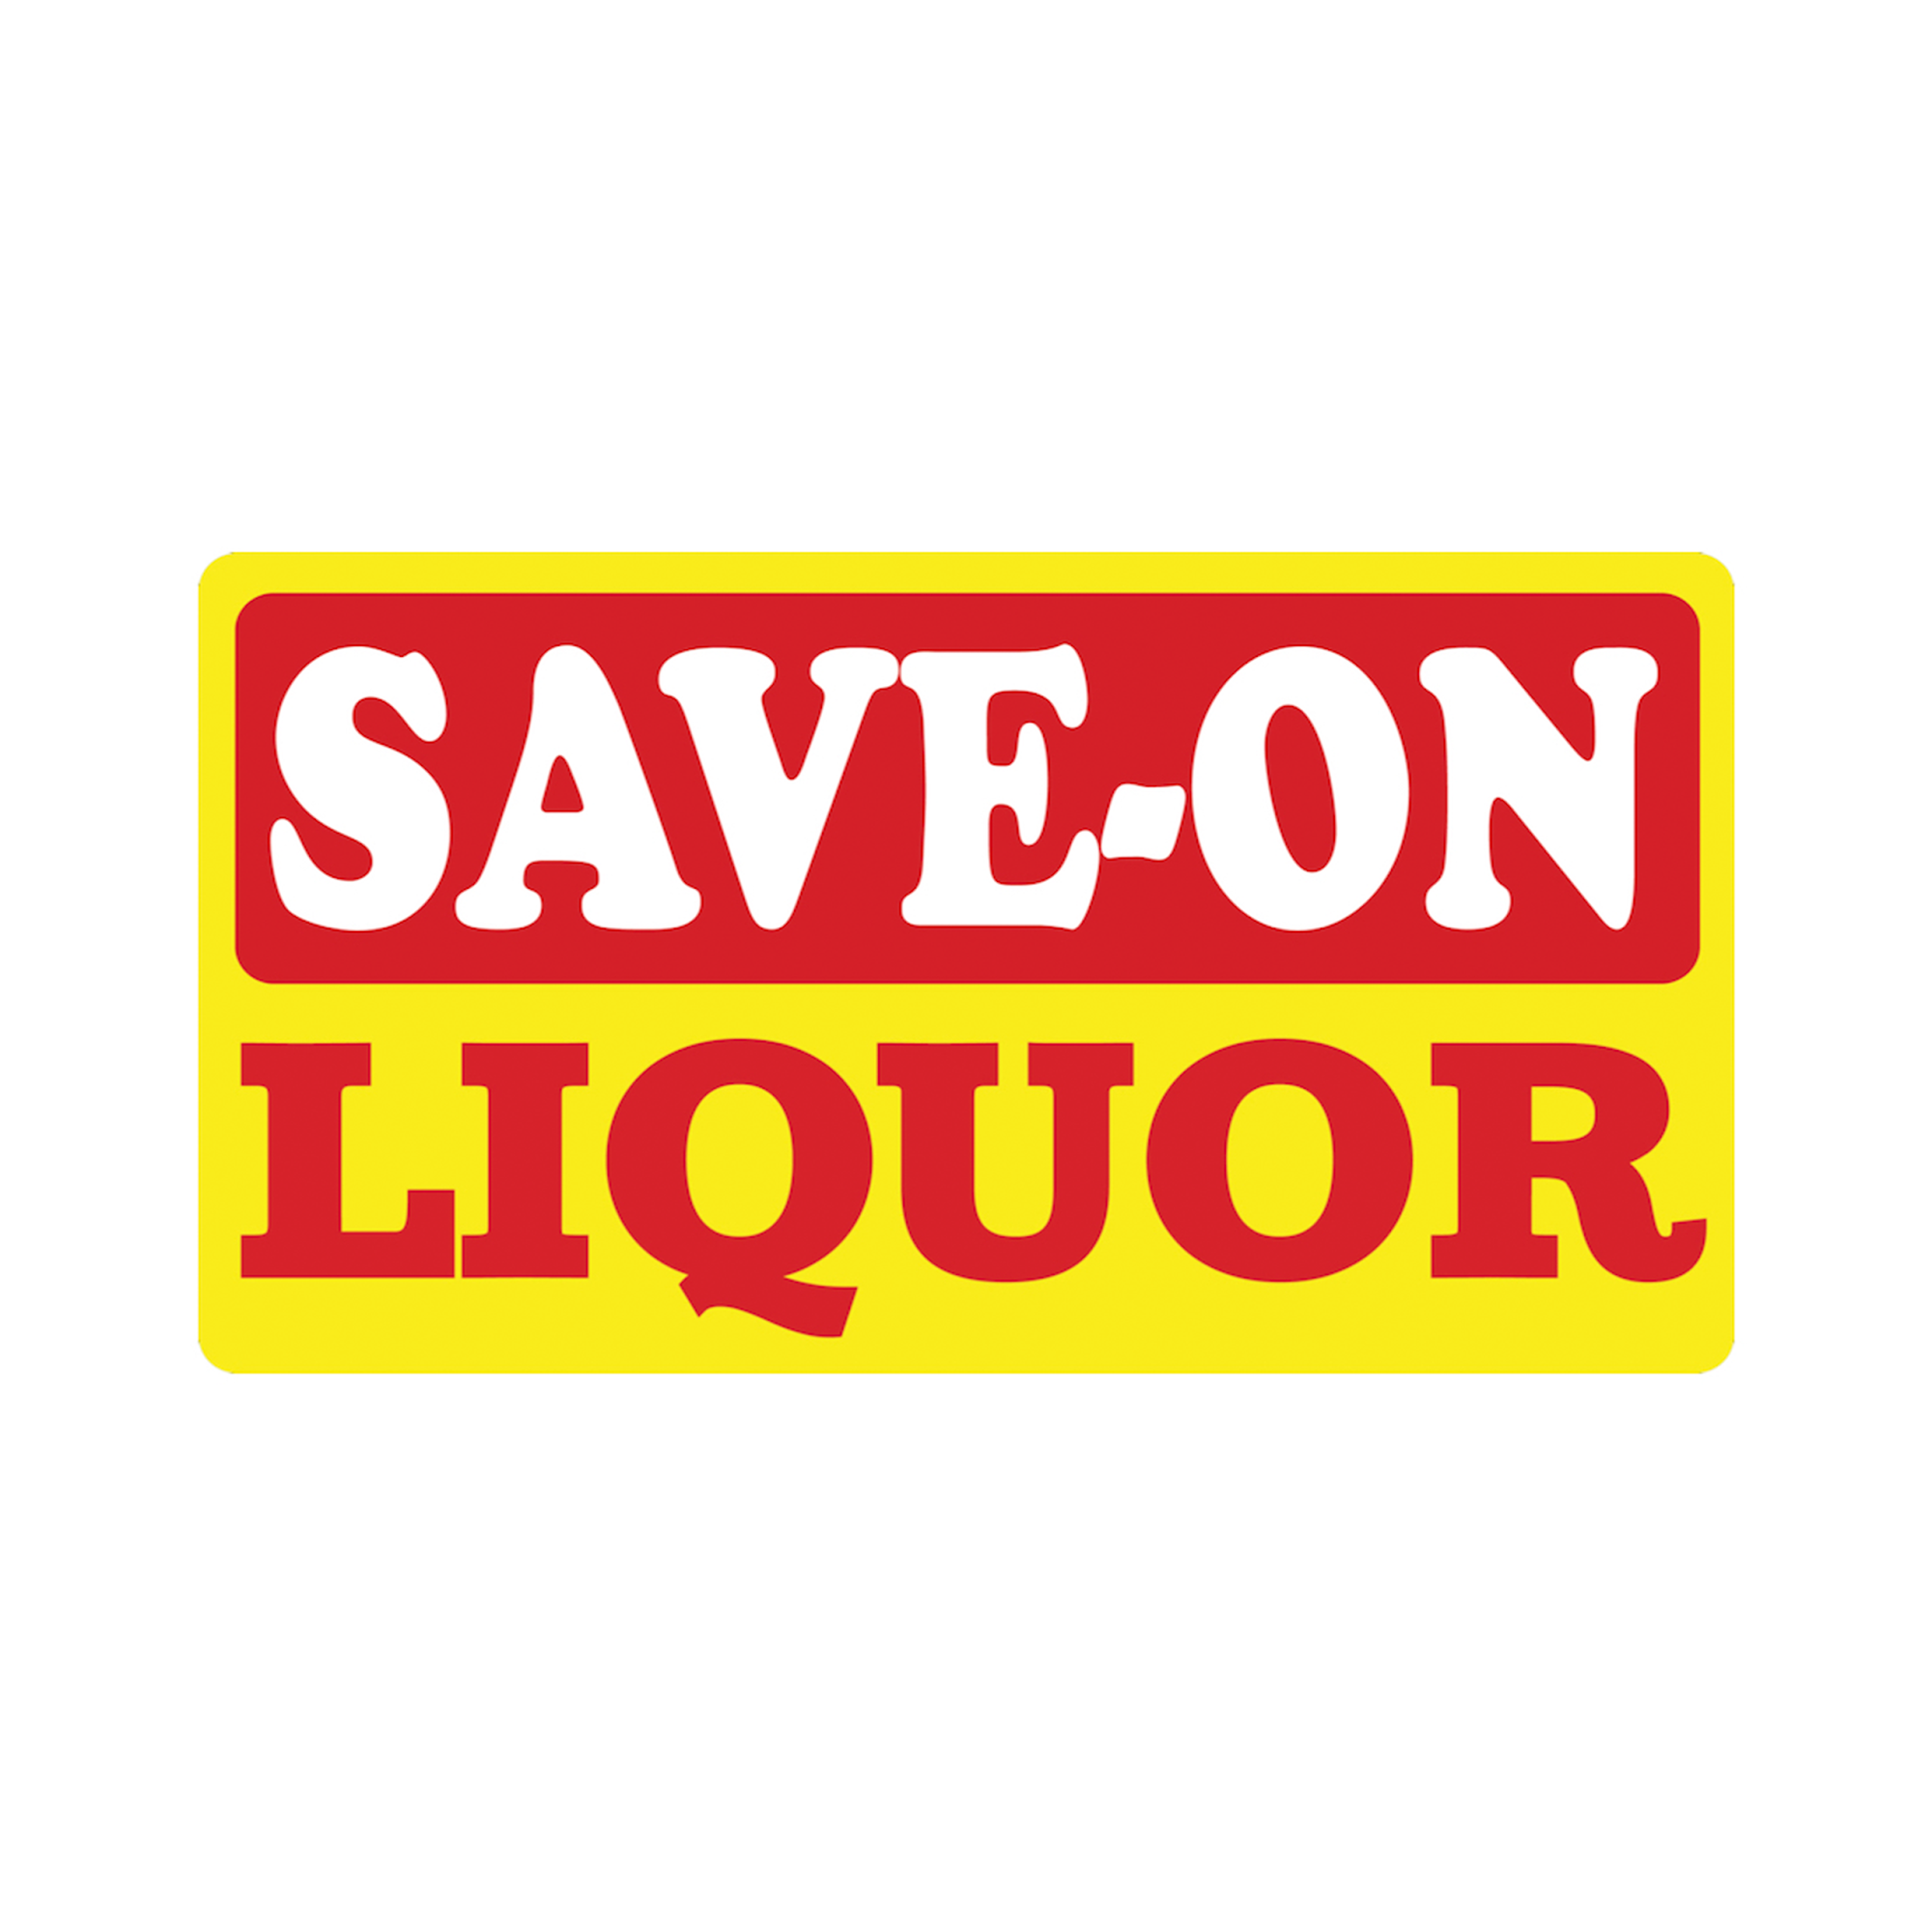 Save-On Liquor